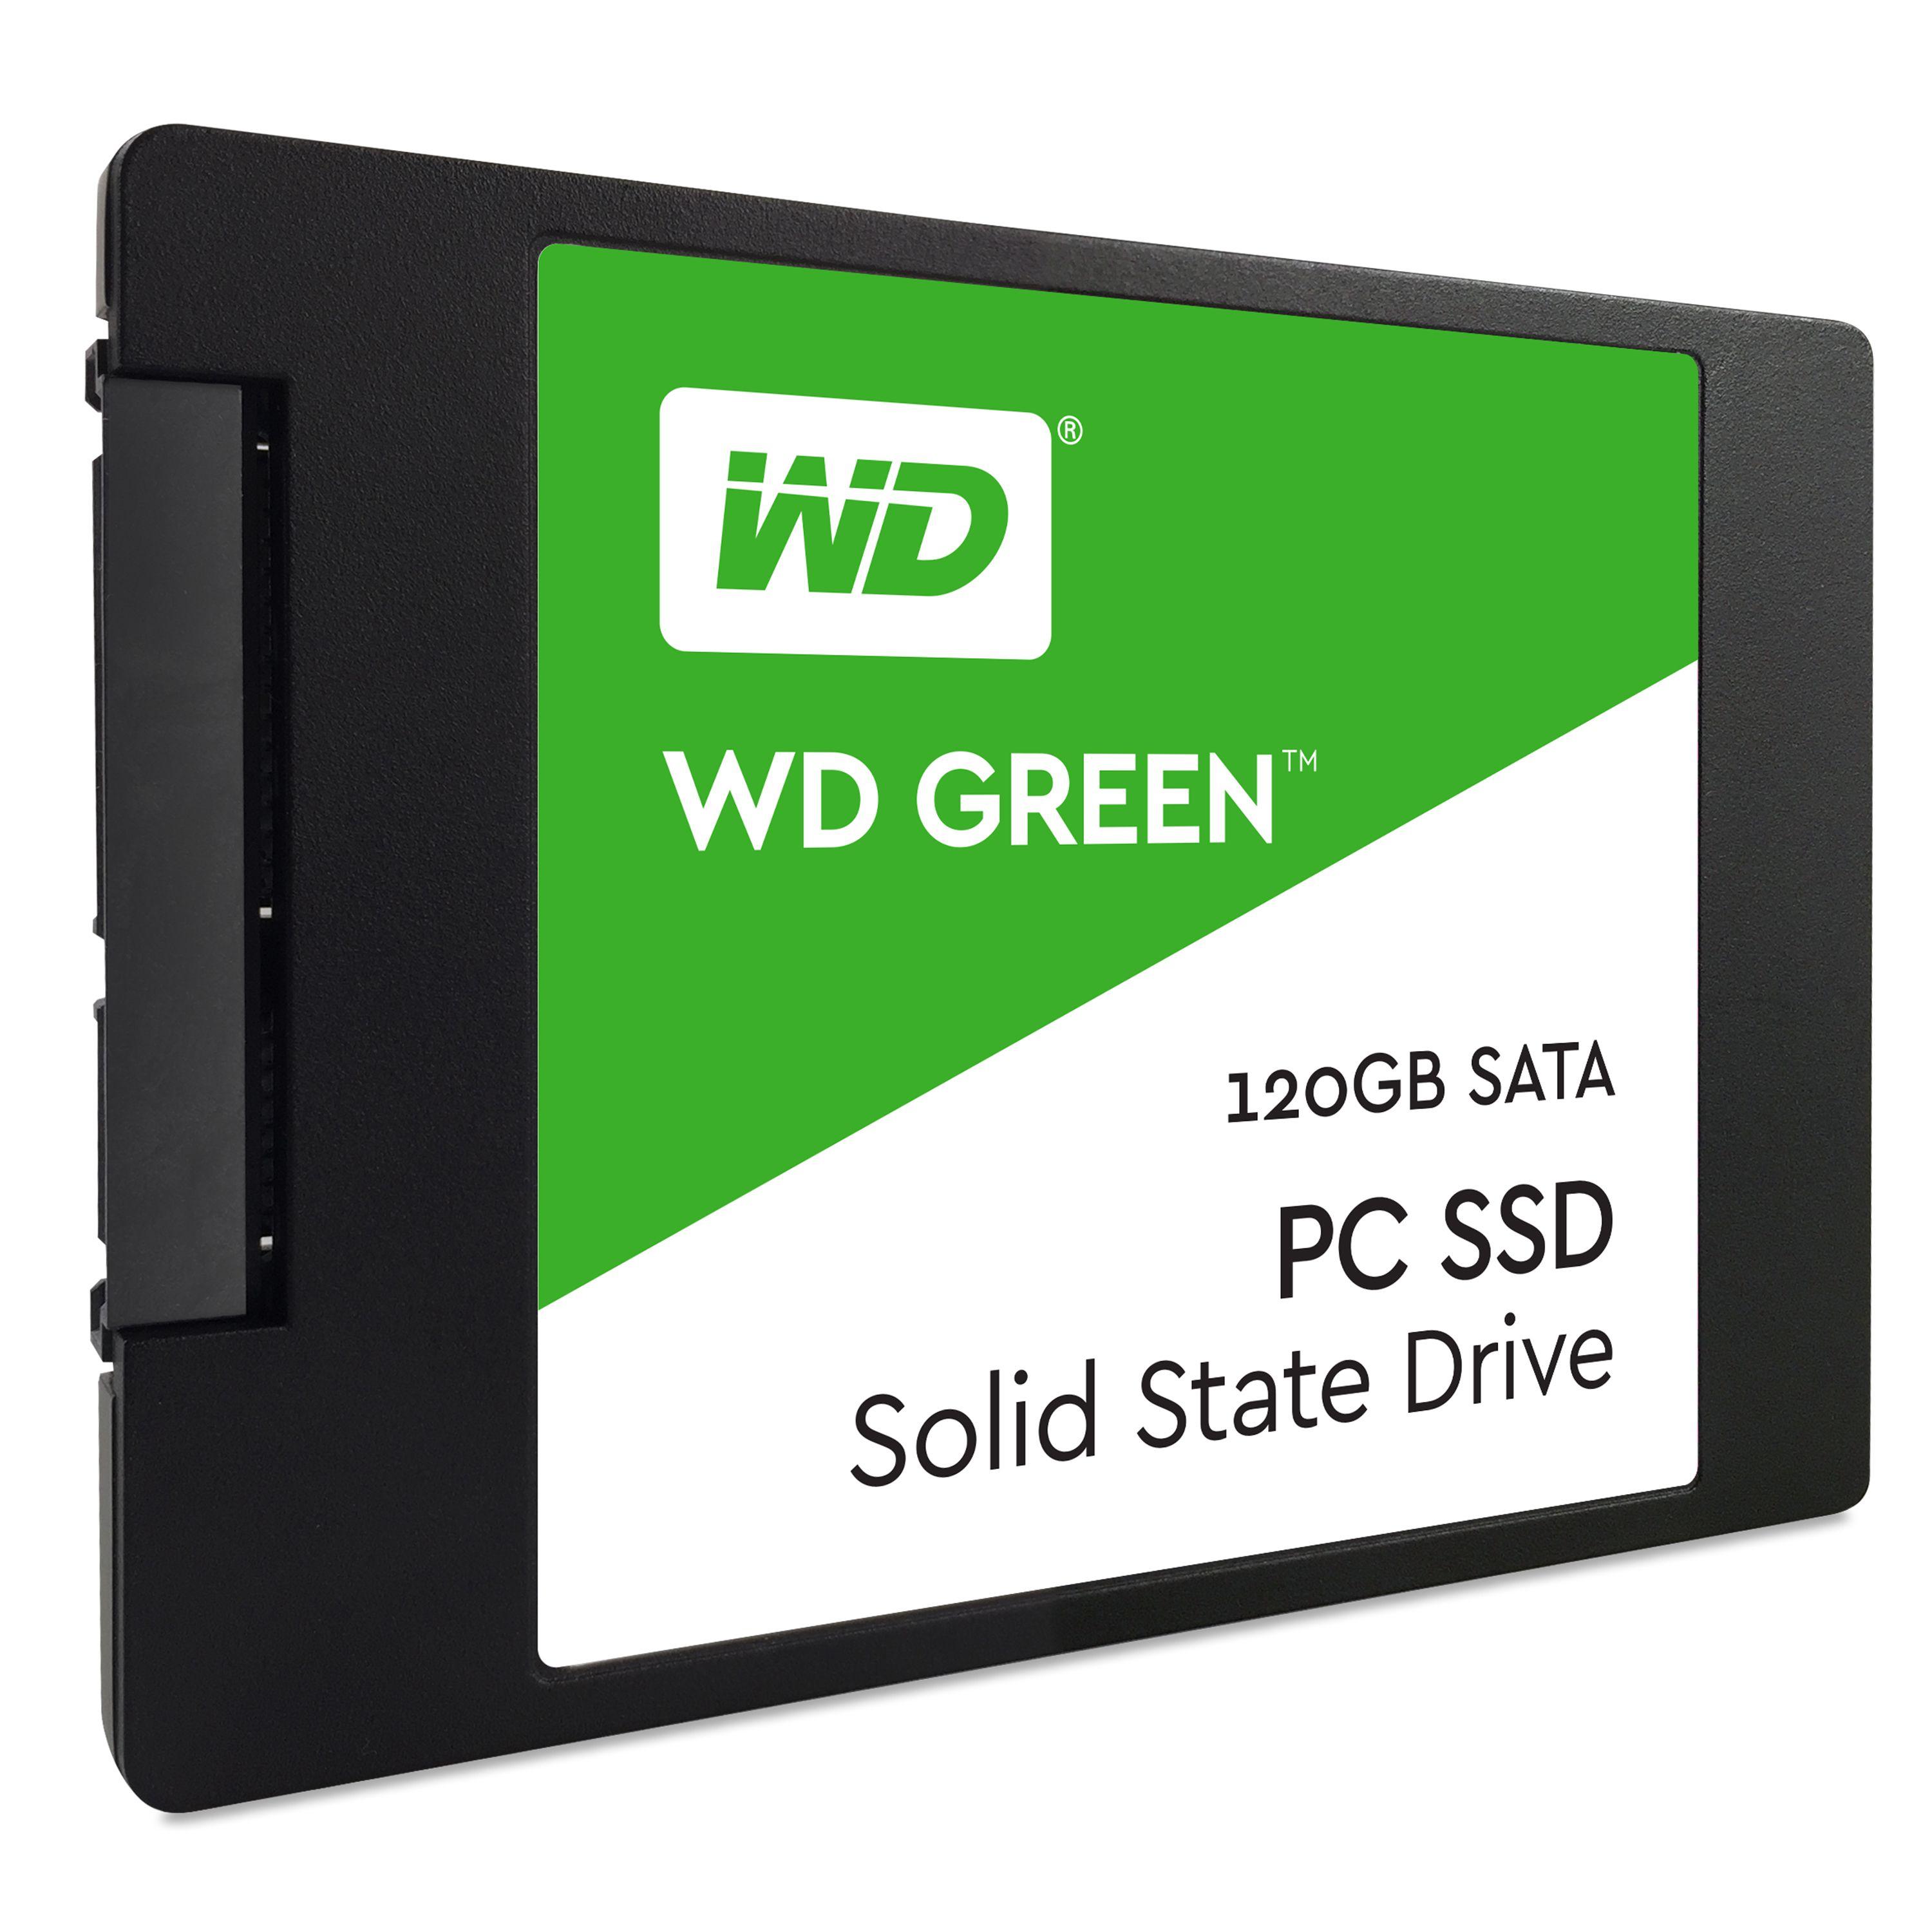 Green PC Logo - Buy Western Digital Green PC SSD 120GB Serial ATA III